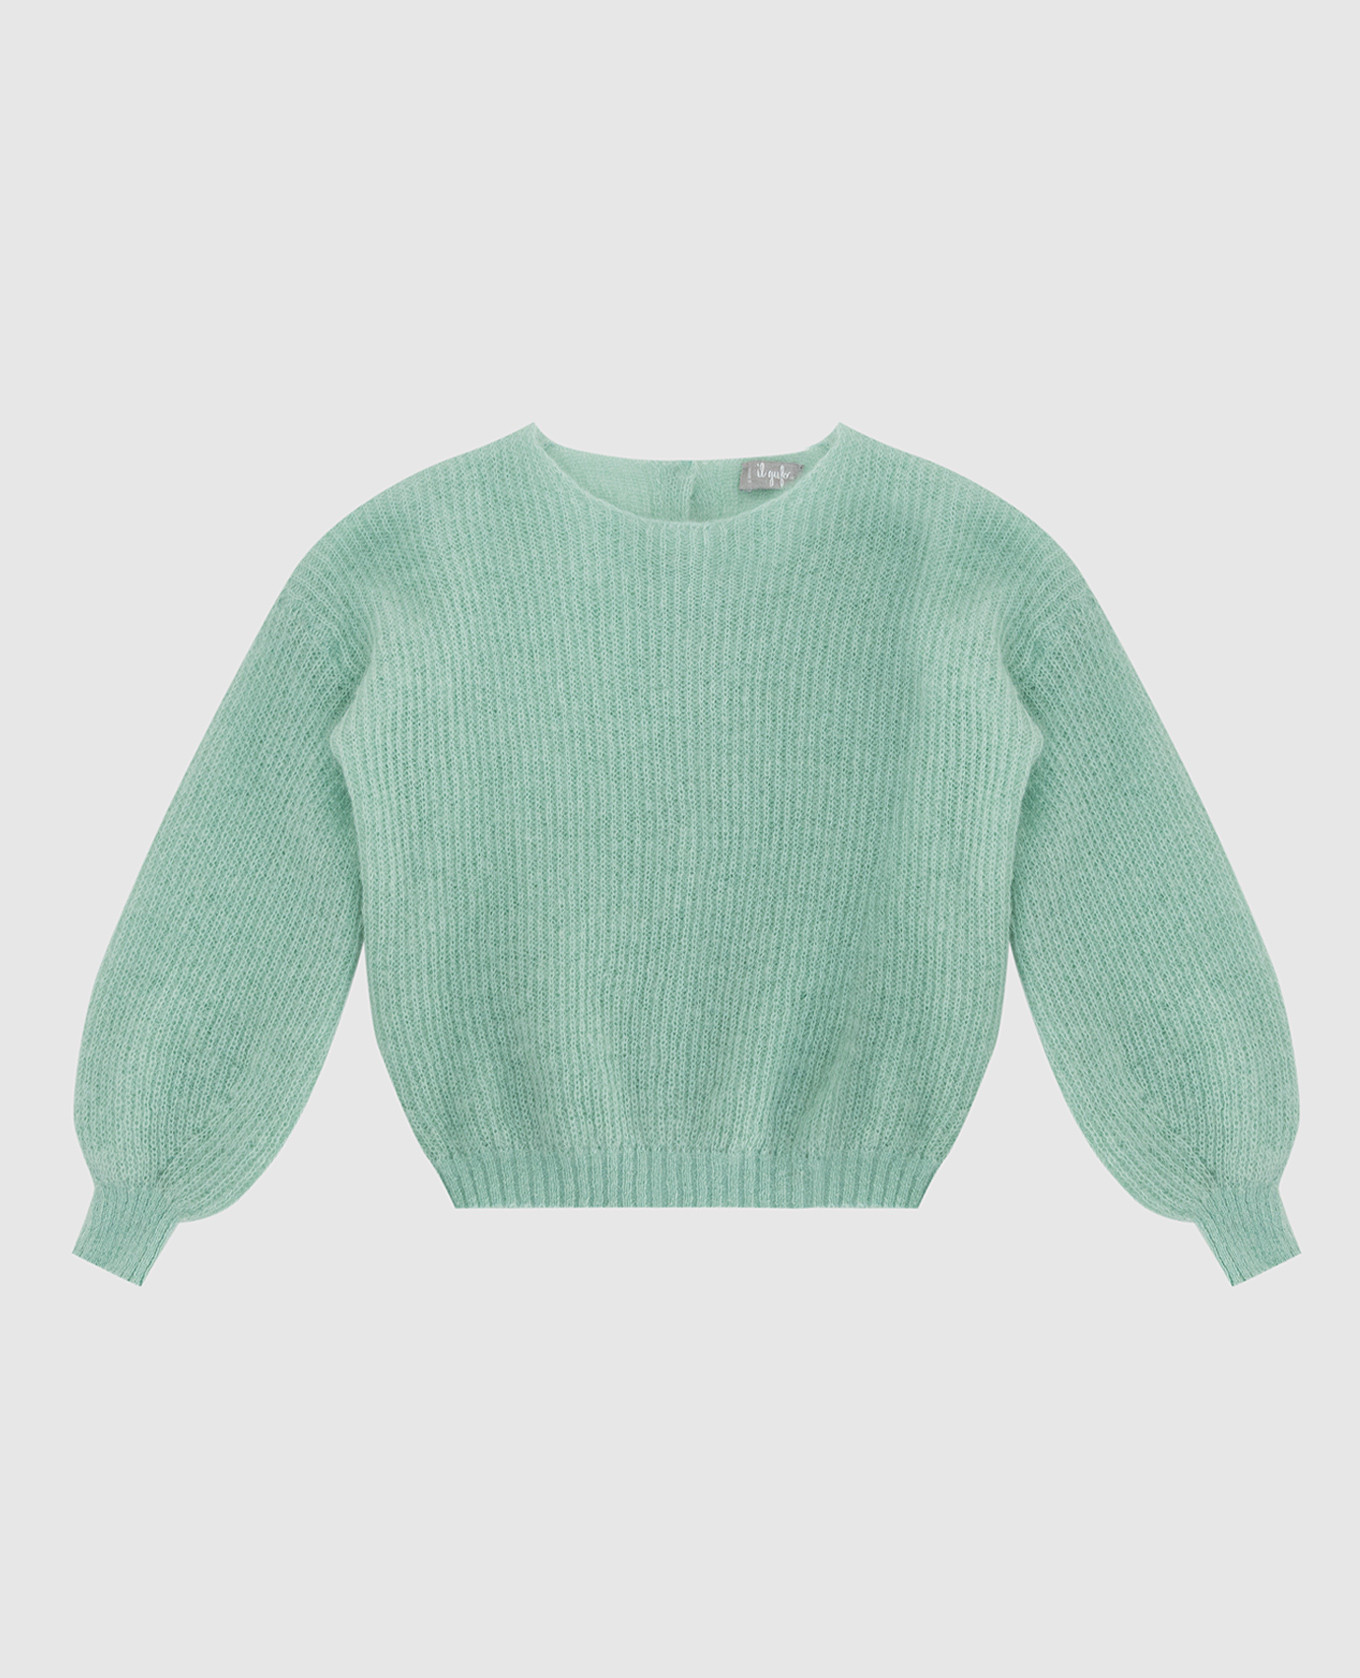 Mint children's sweater